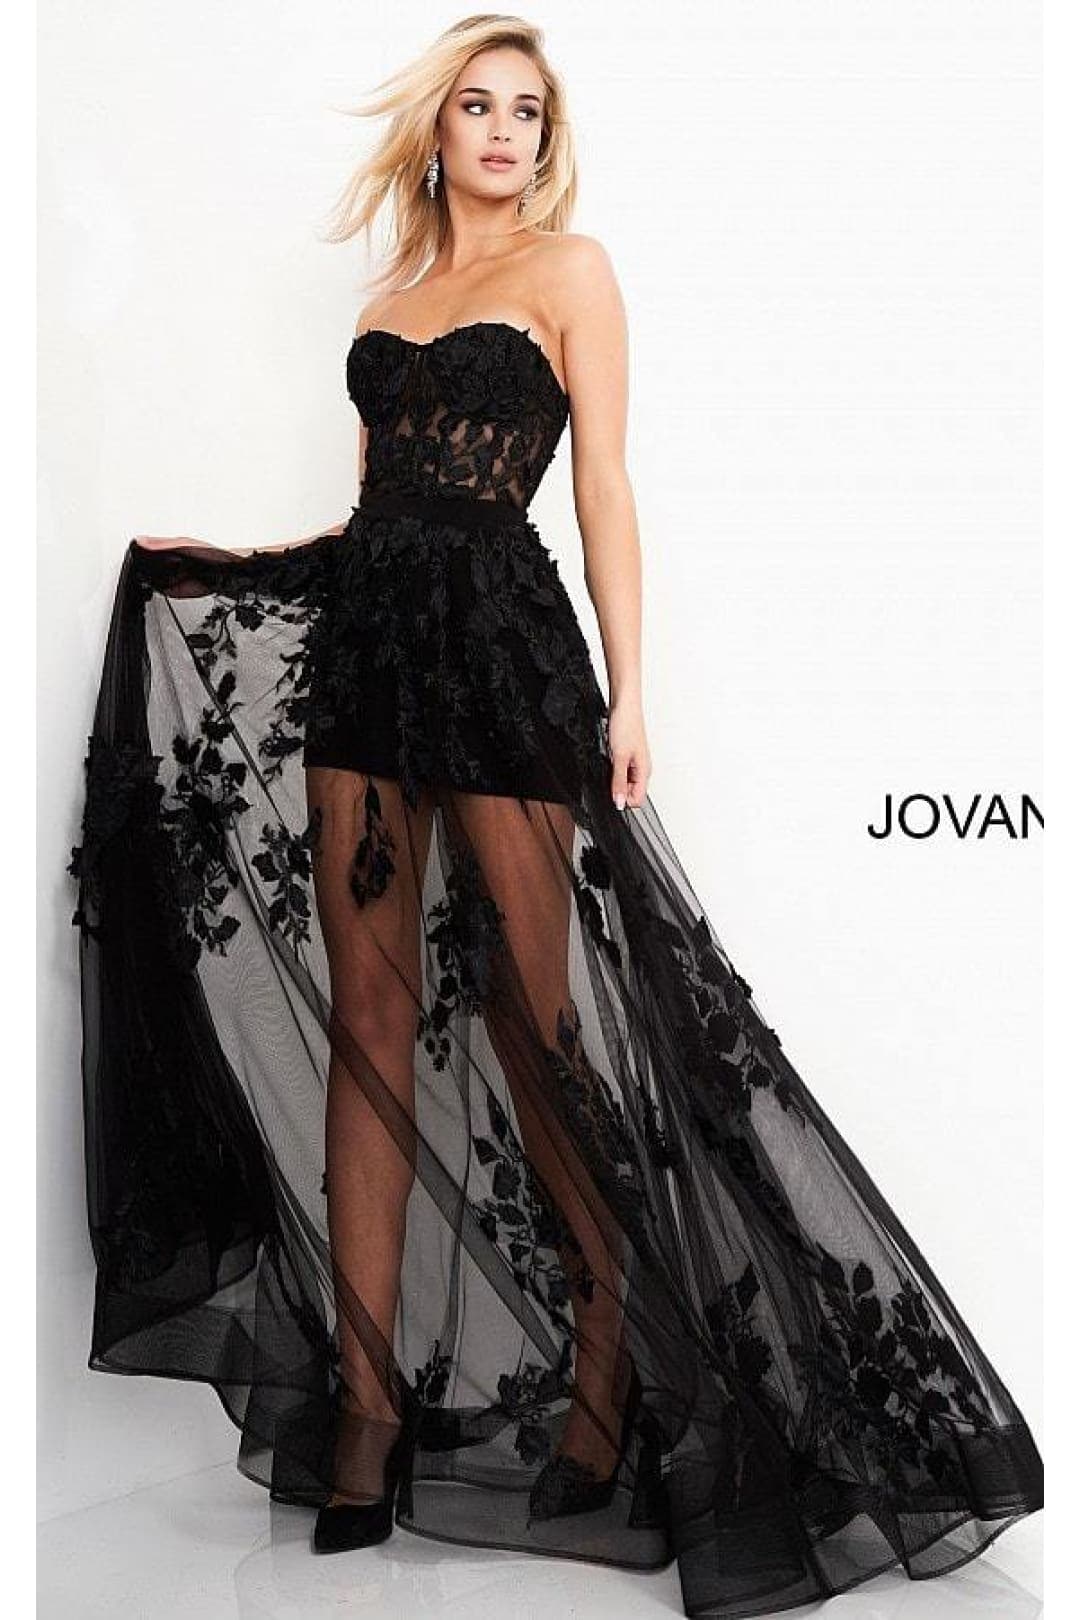 Jovani 04914 Strapless Sheer Bone Corset Sequin Short Nude Prom Dress